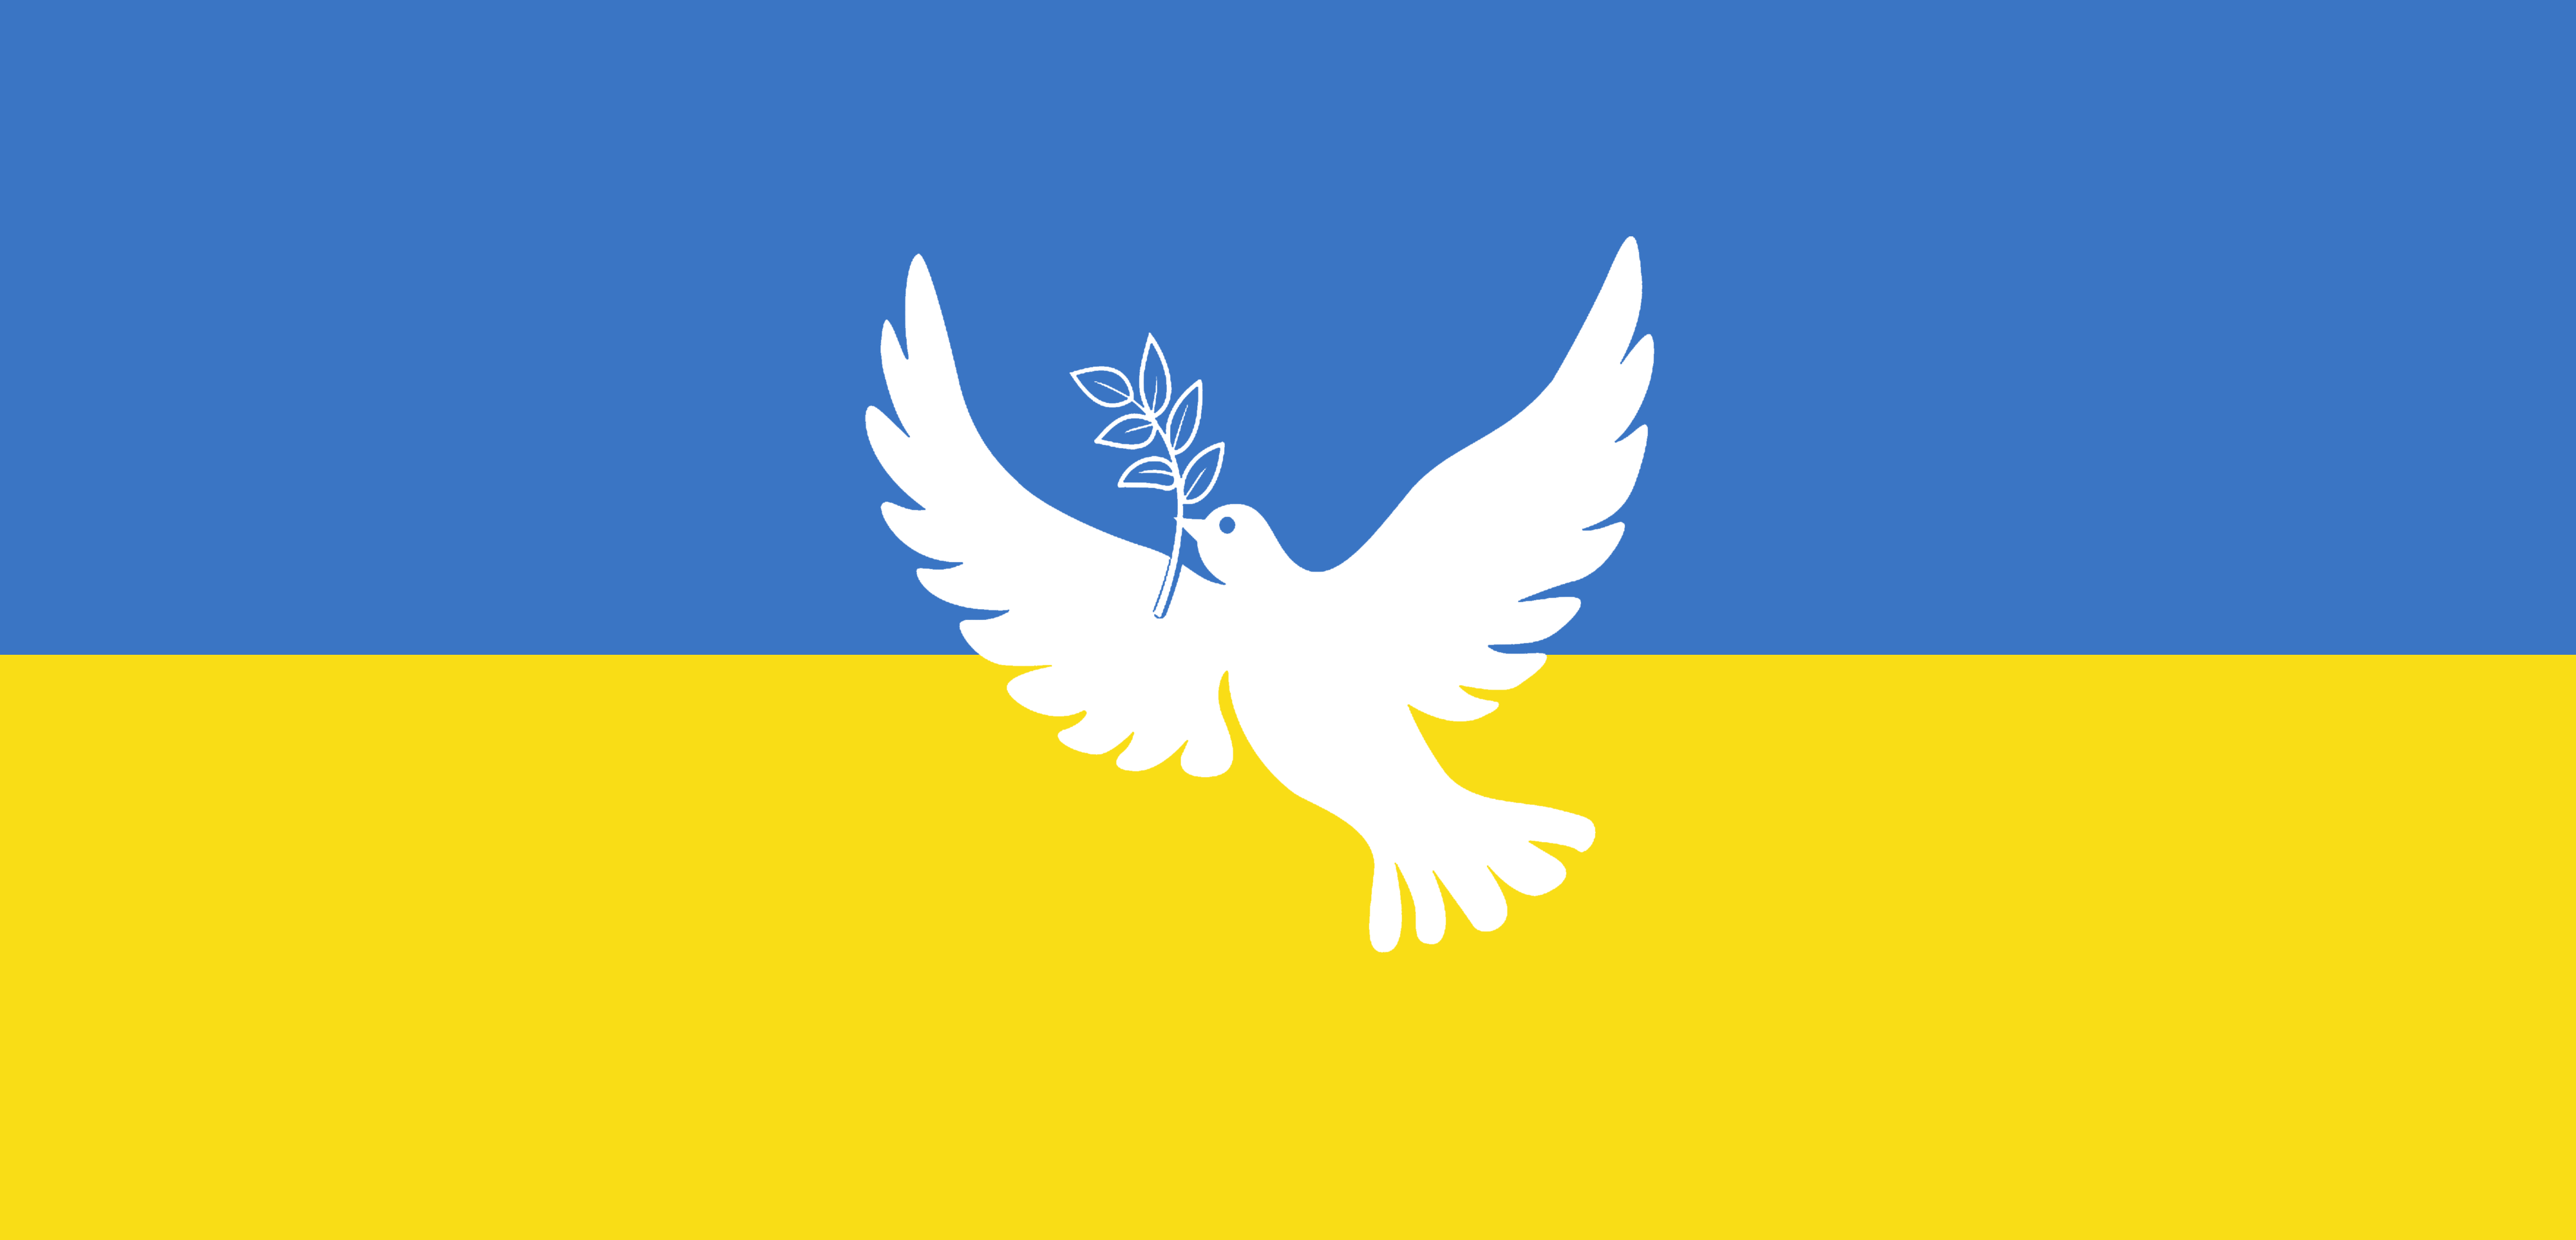 Stop the war! Peace for Ukraine!